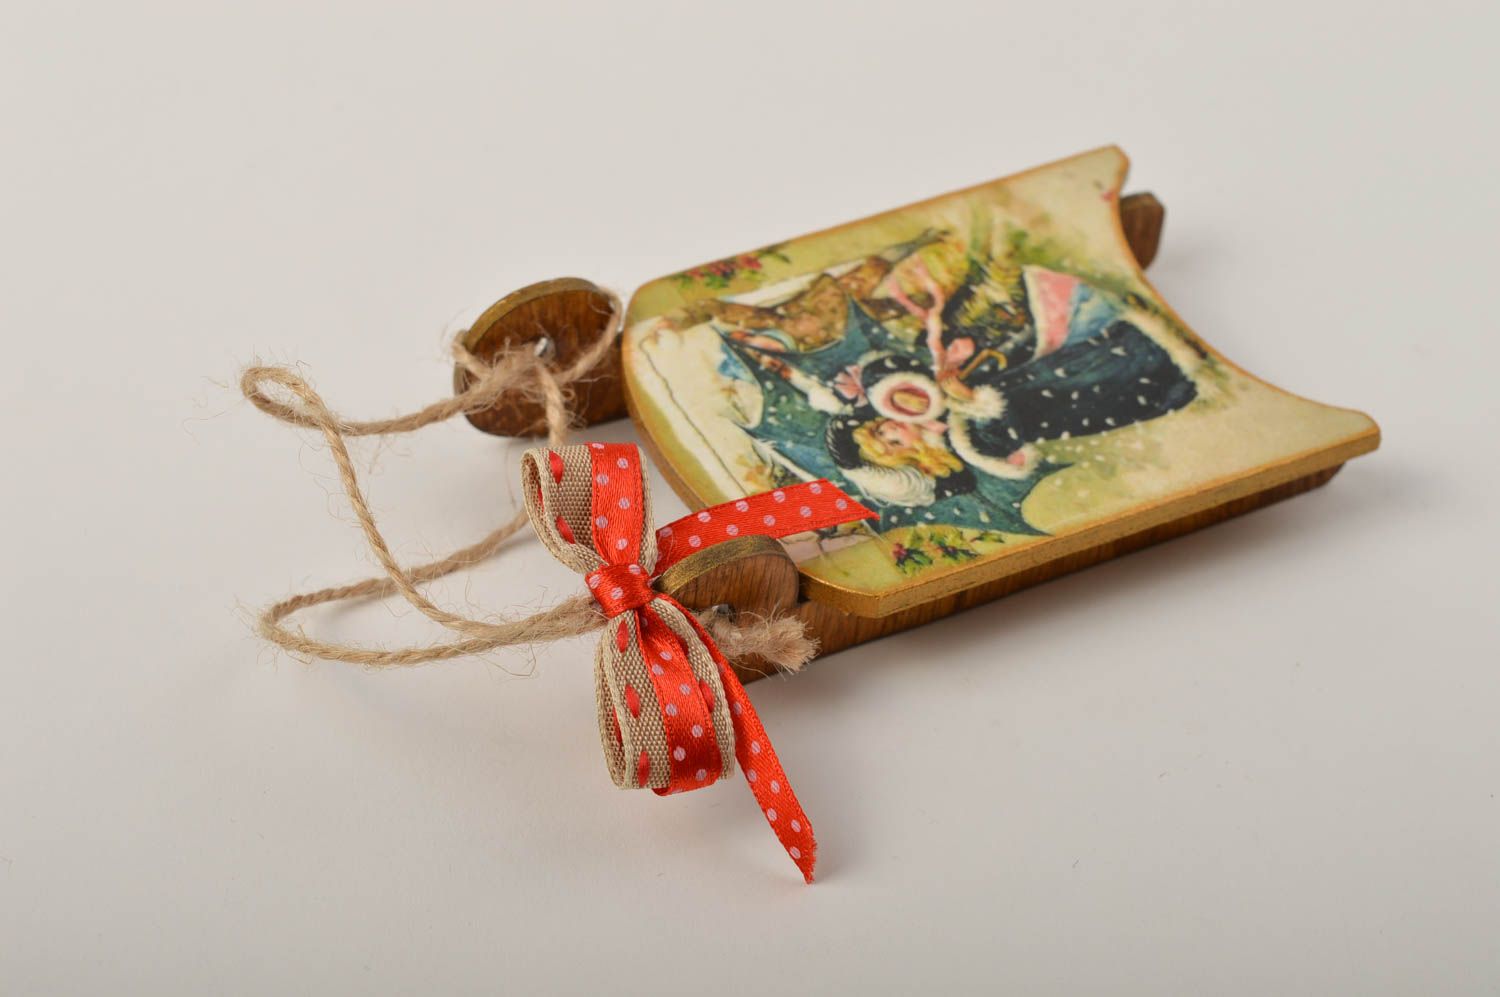 Adorno navideño casero hecho a mano elemento decorativo souvenir original foto 2